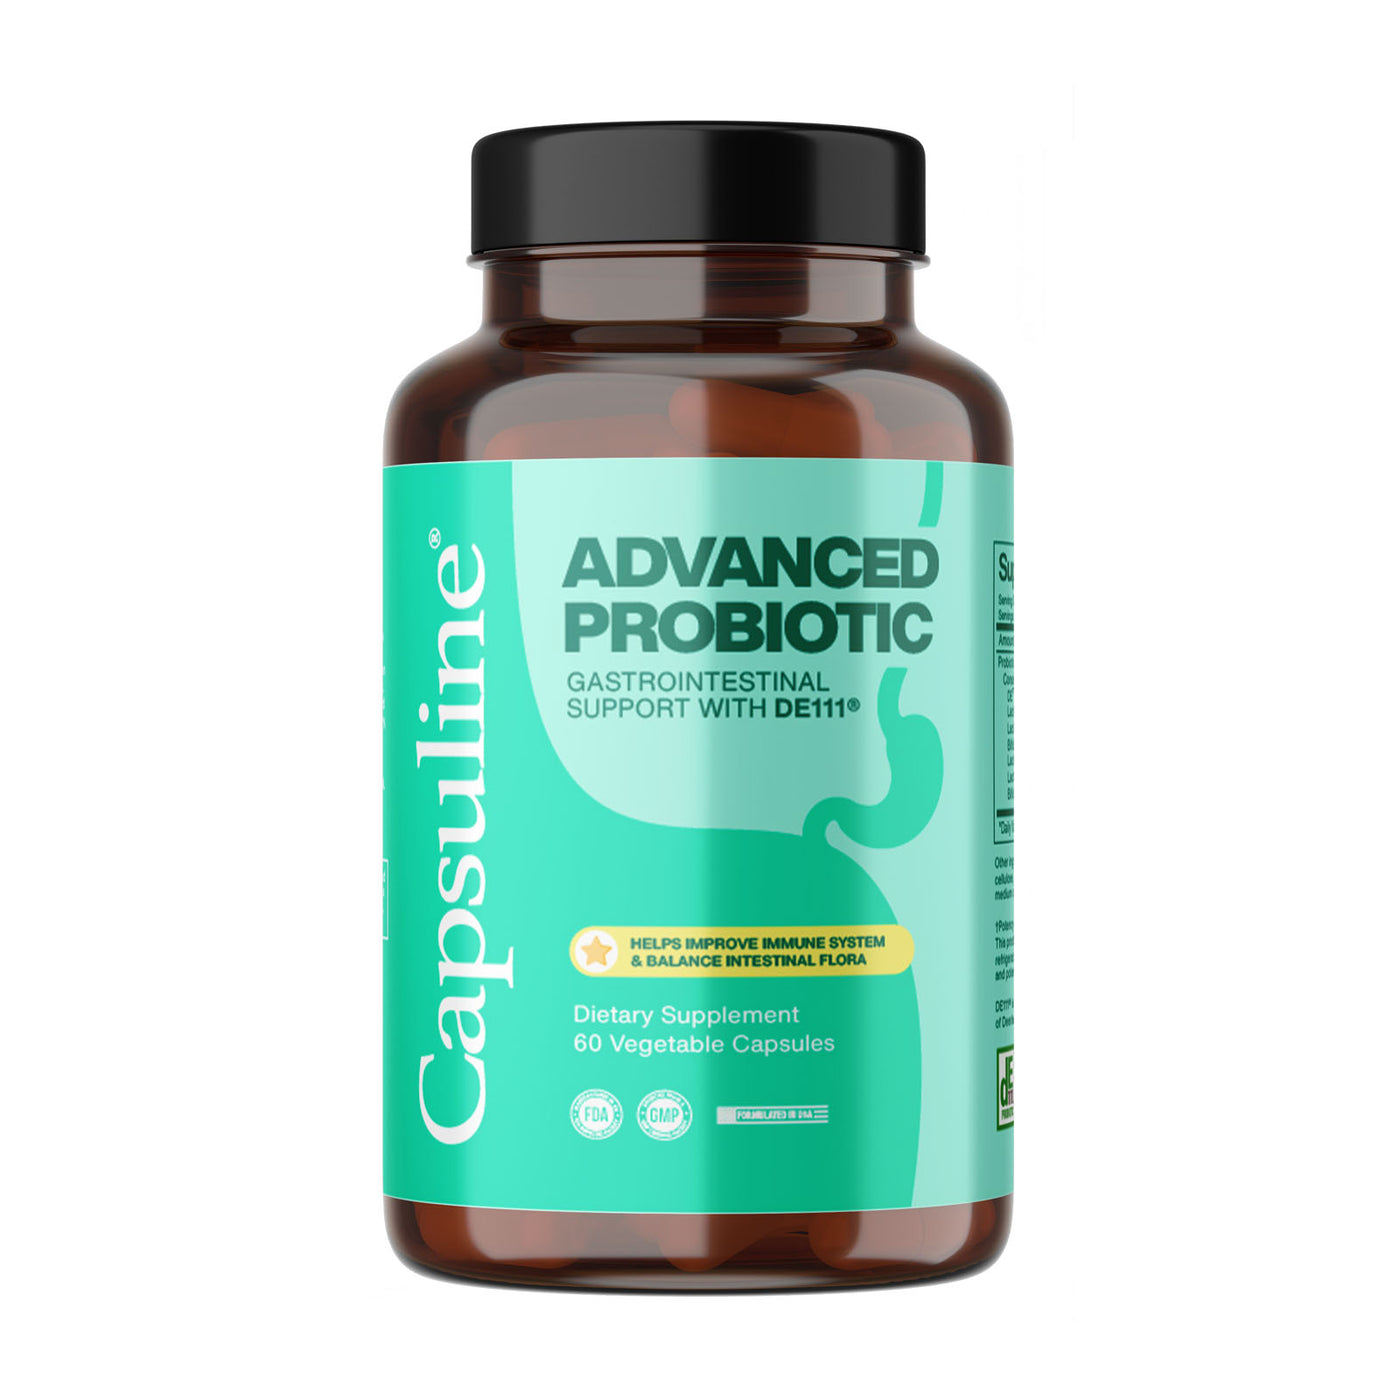 Advanced Probiotic - 60 Count Veg Capsules - 1 Pack